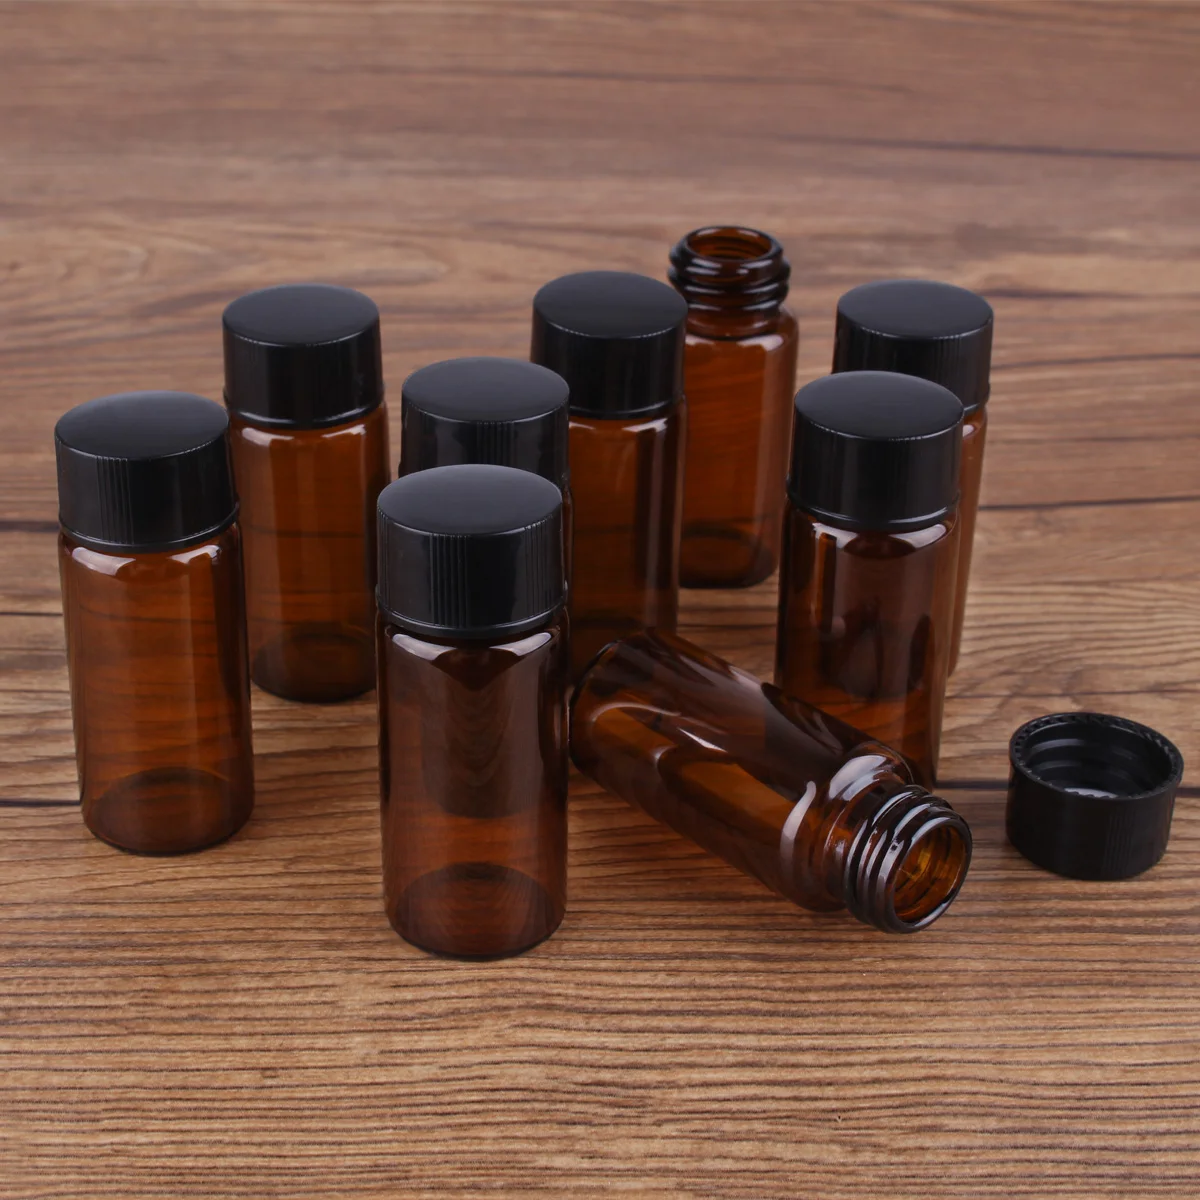 2ML Amber Glass Dram Vials - Liquid Bottle Storage Containers - Identify  Diagnostics